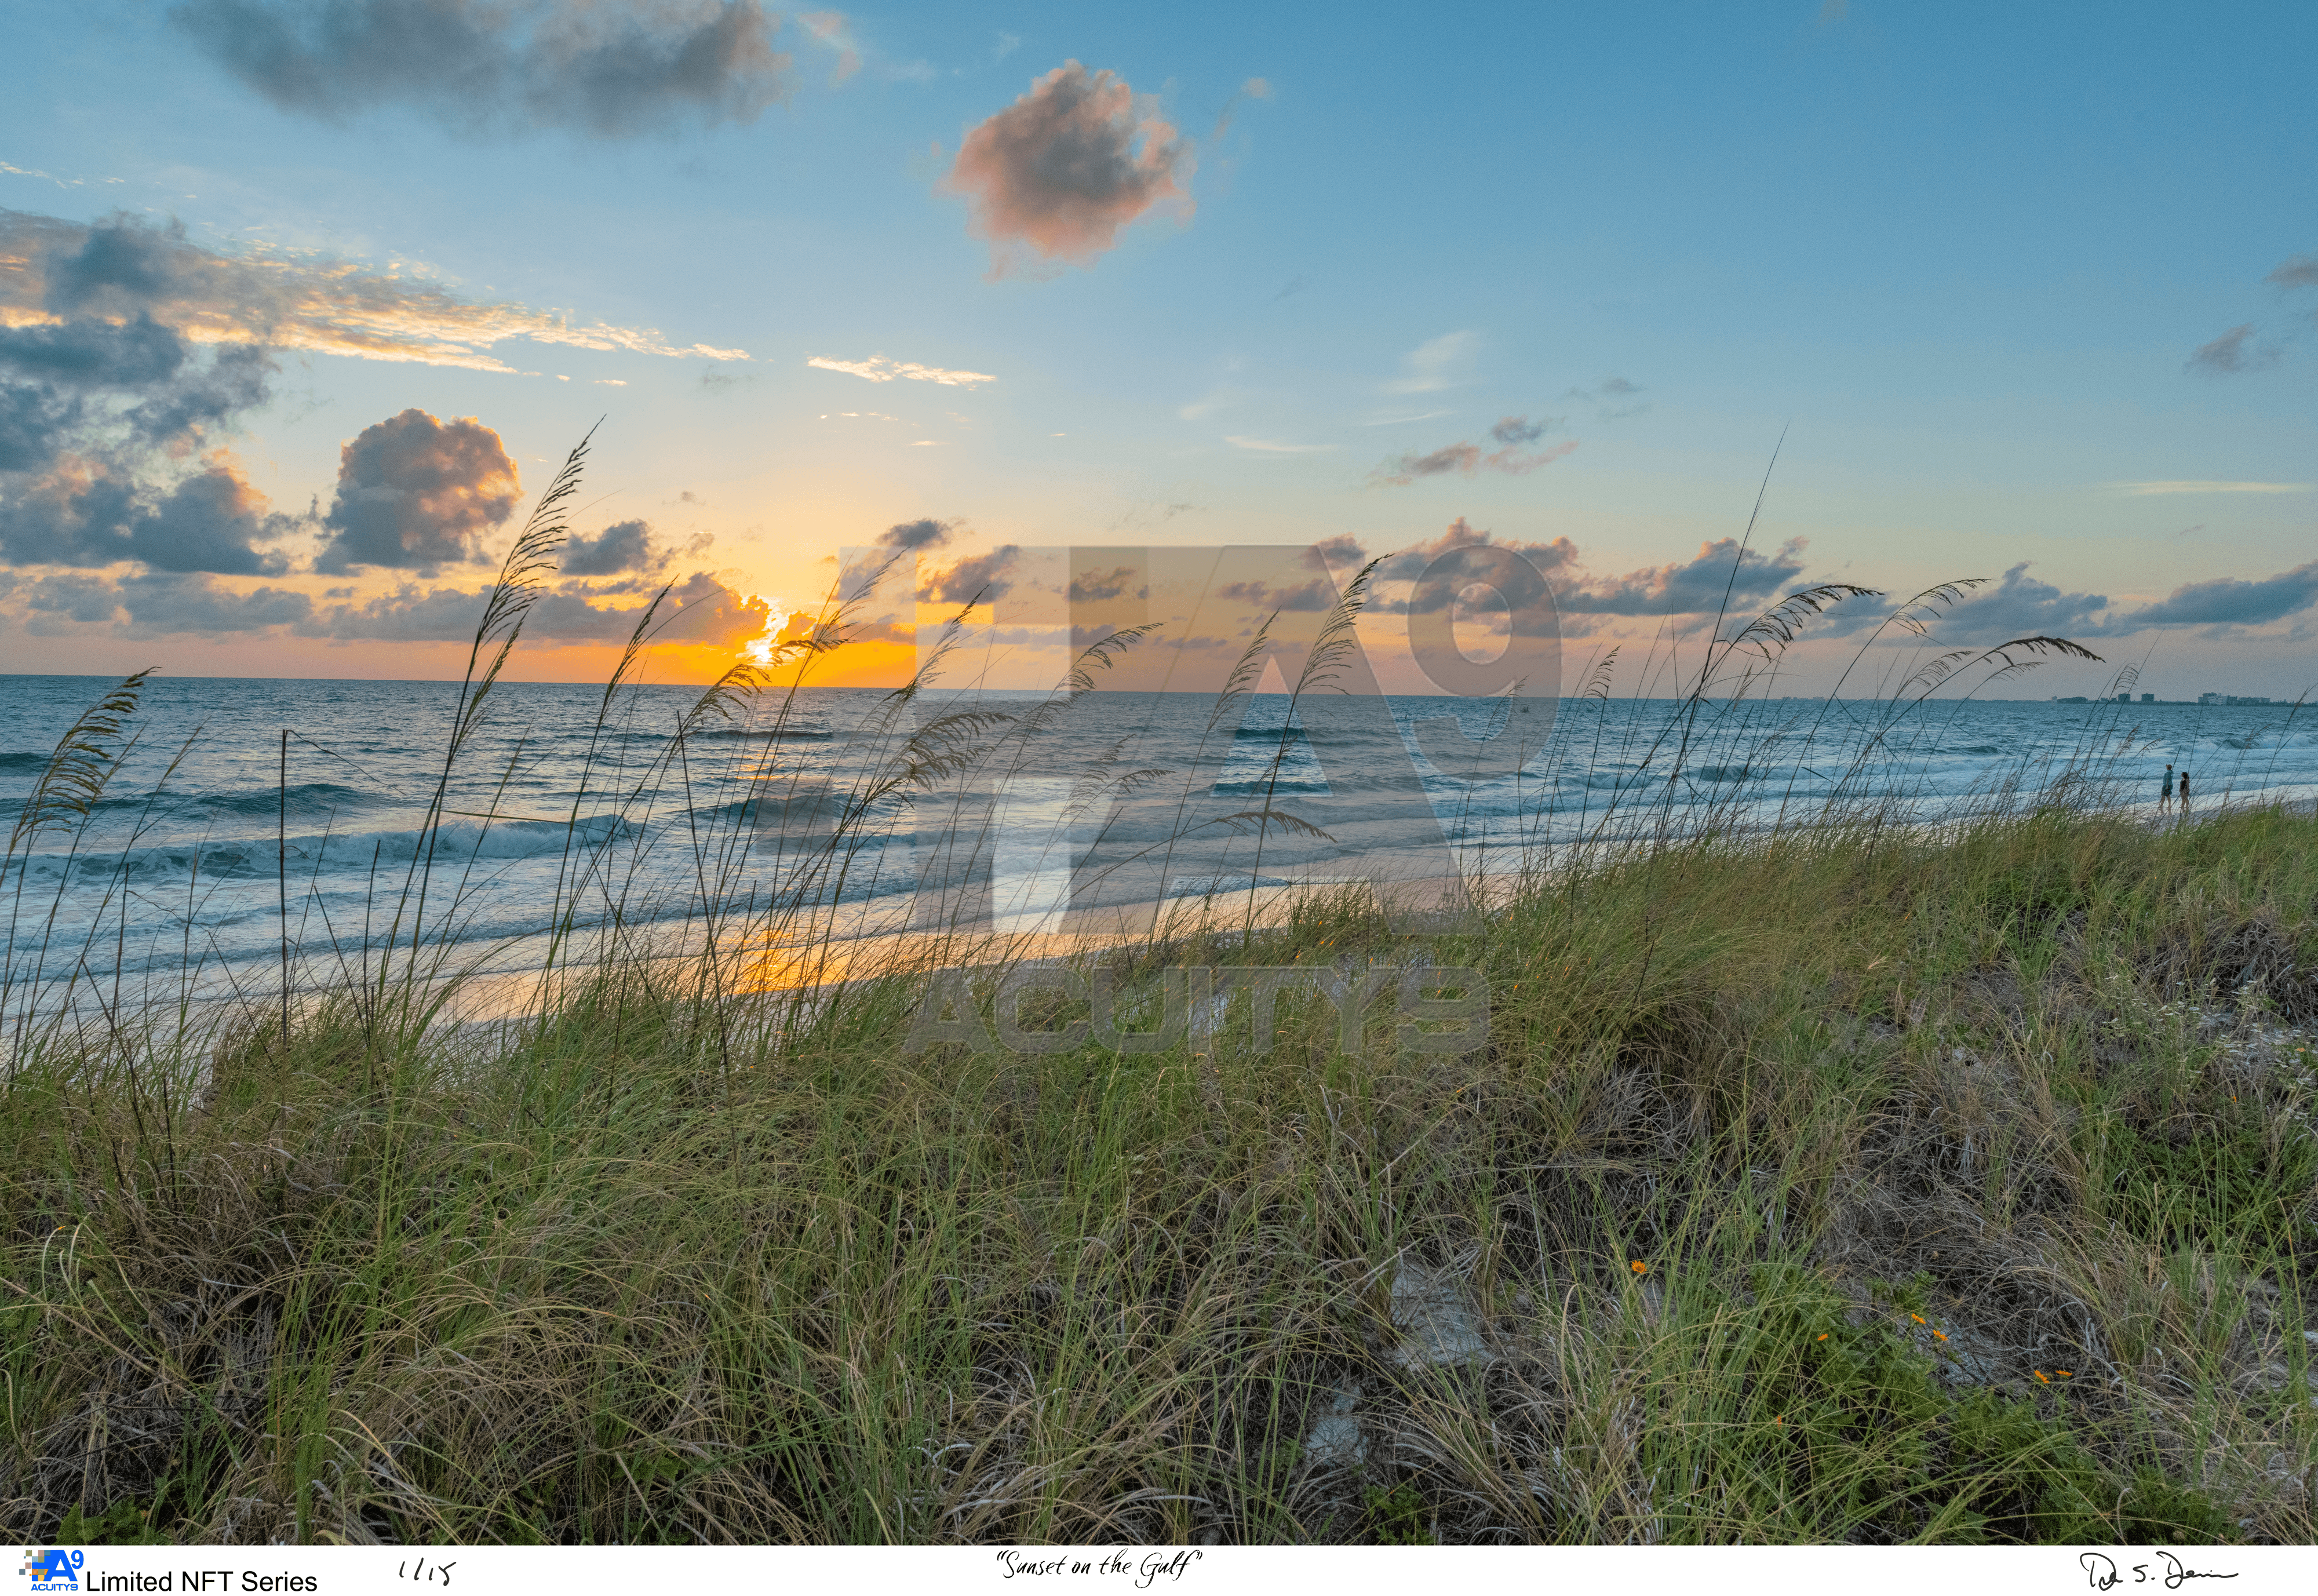 "Sunset on the Gulf"